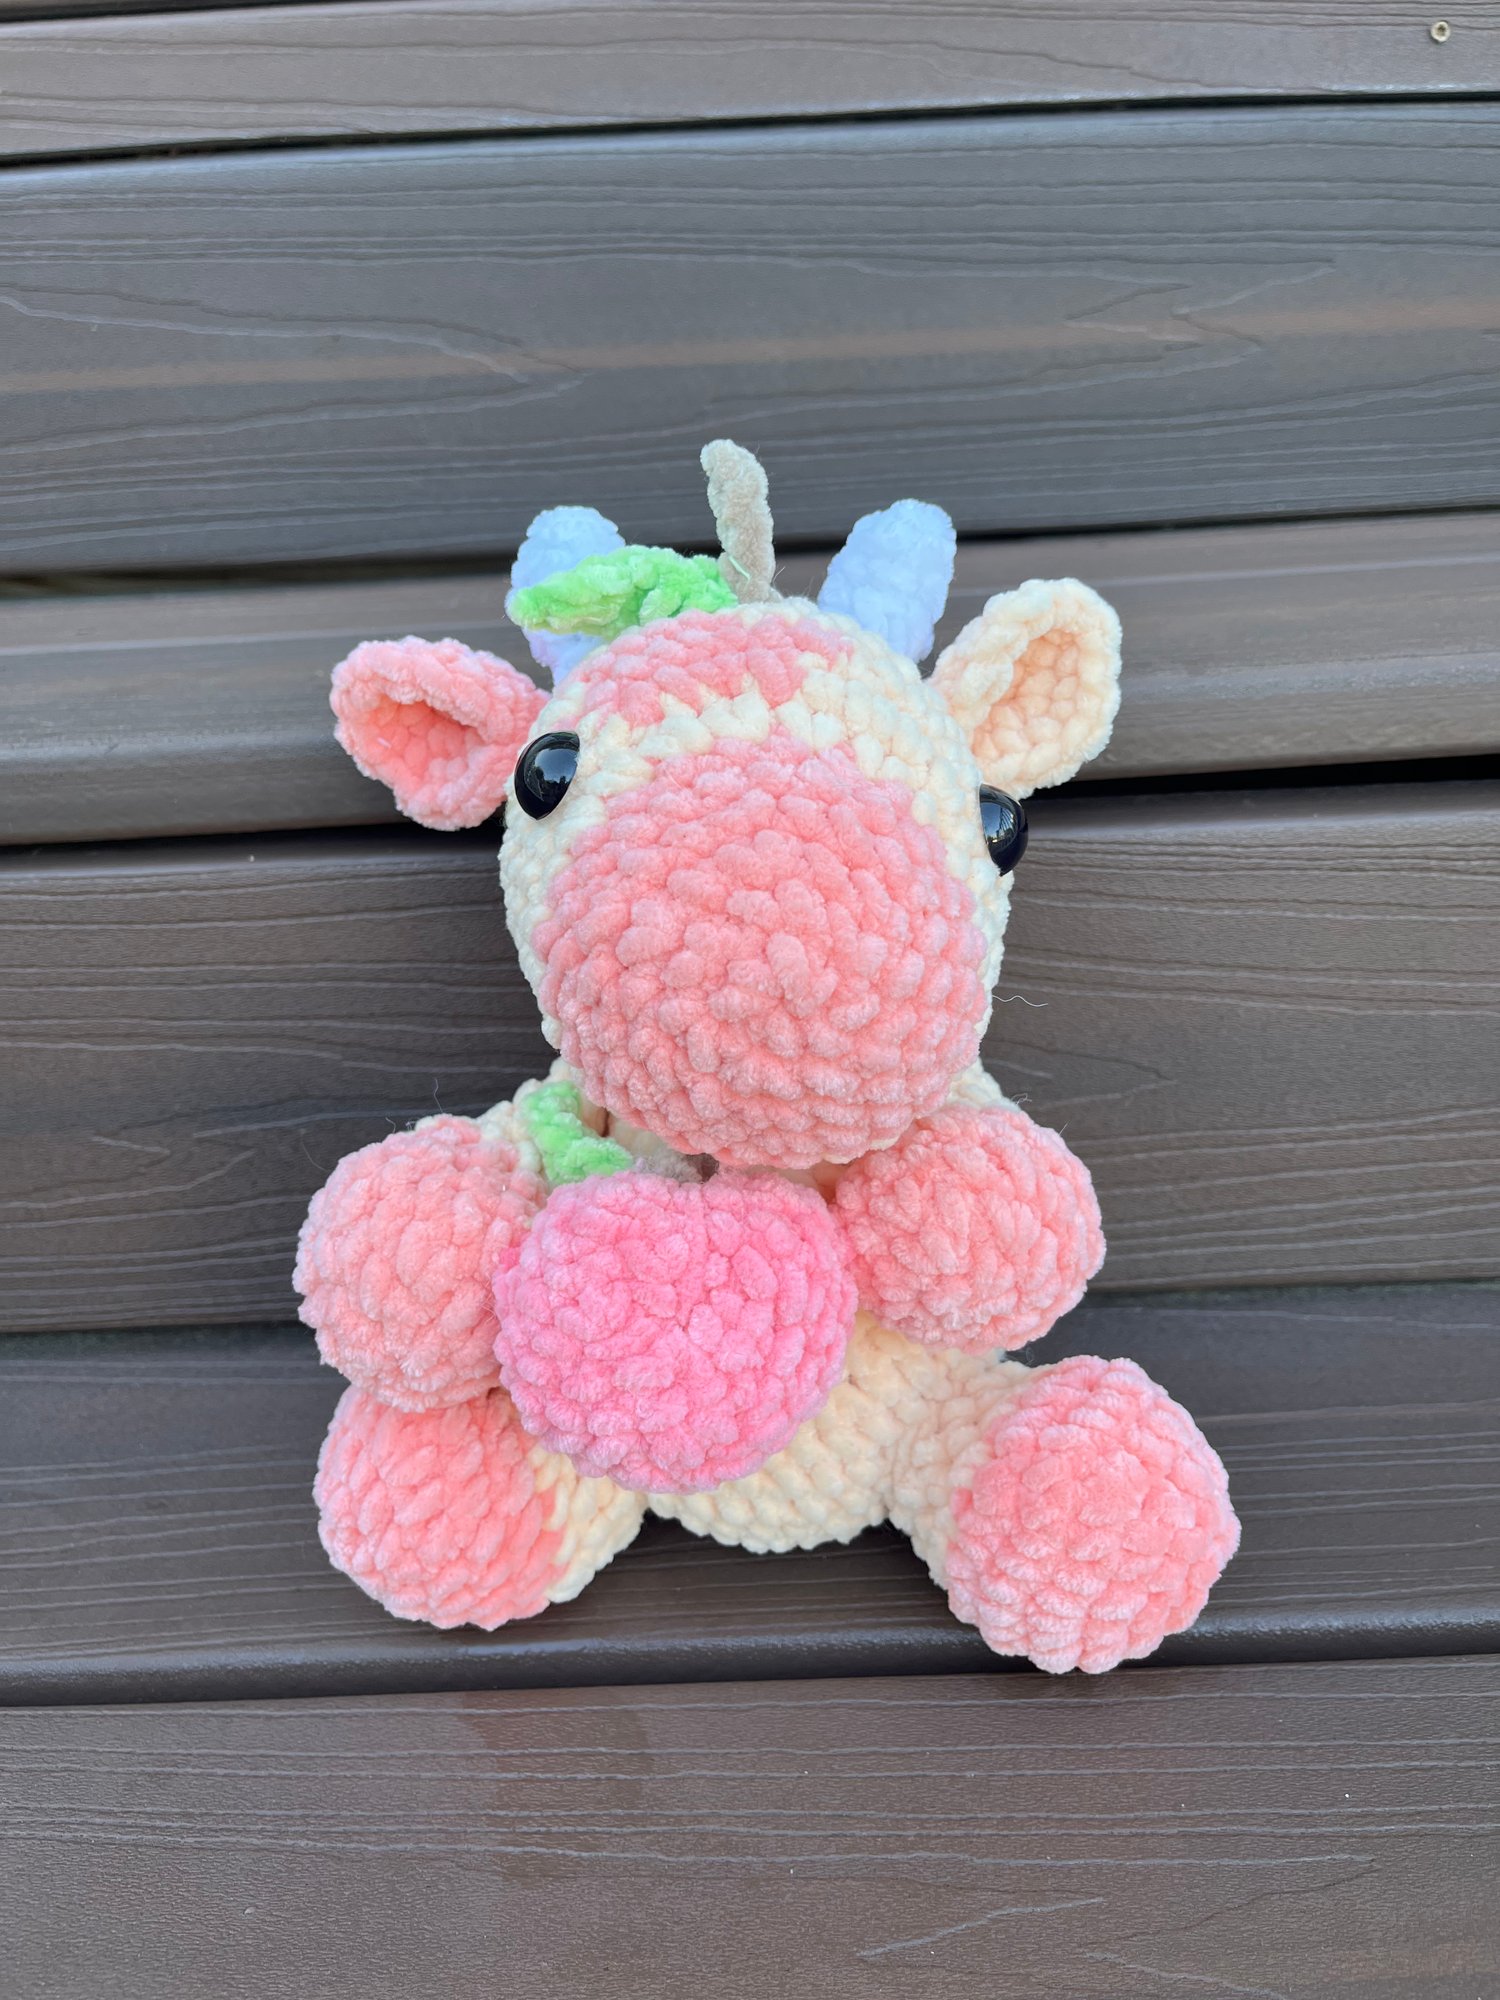 Image of Crochet Plush Peach Cow